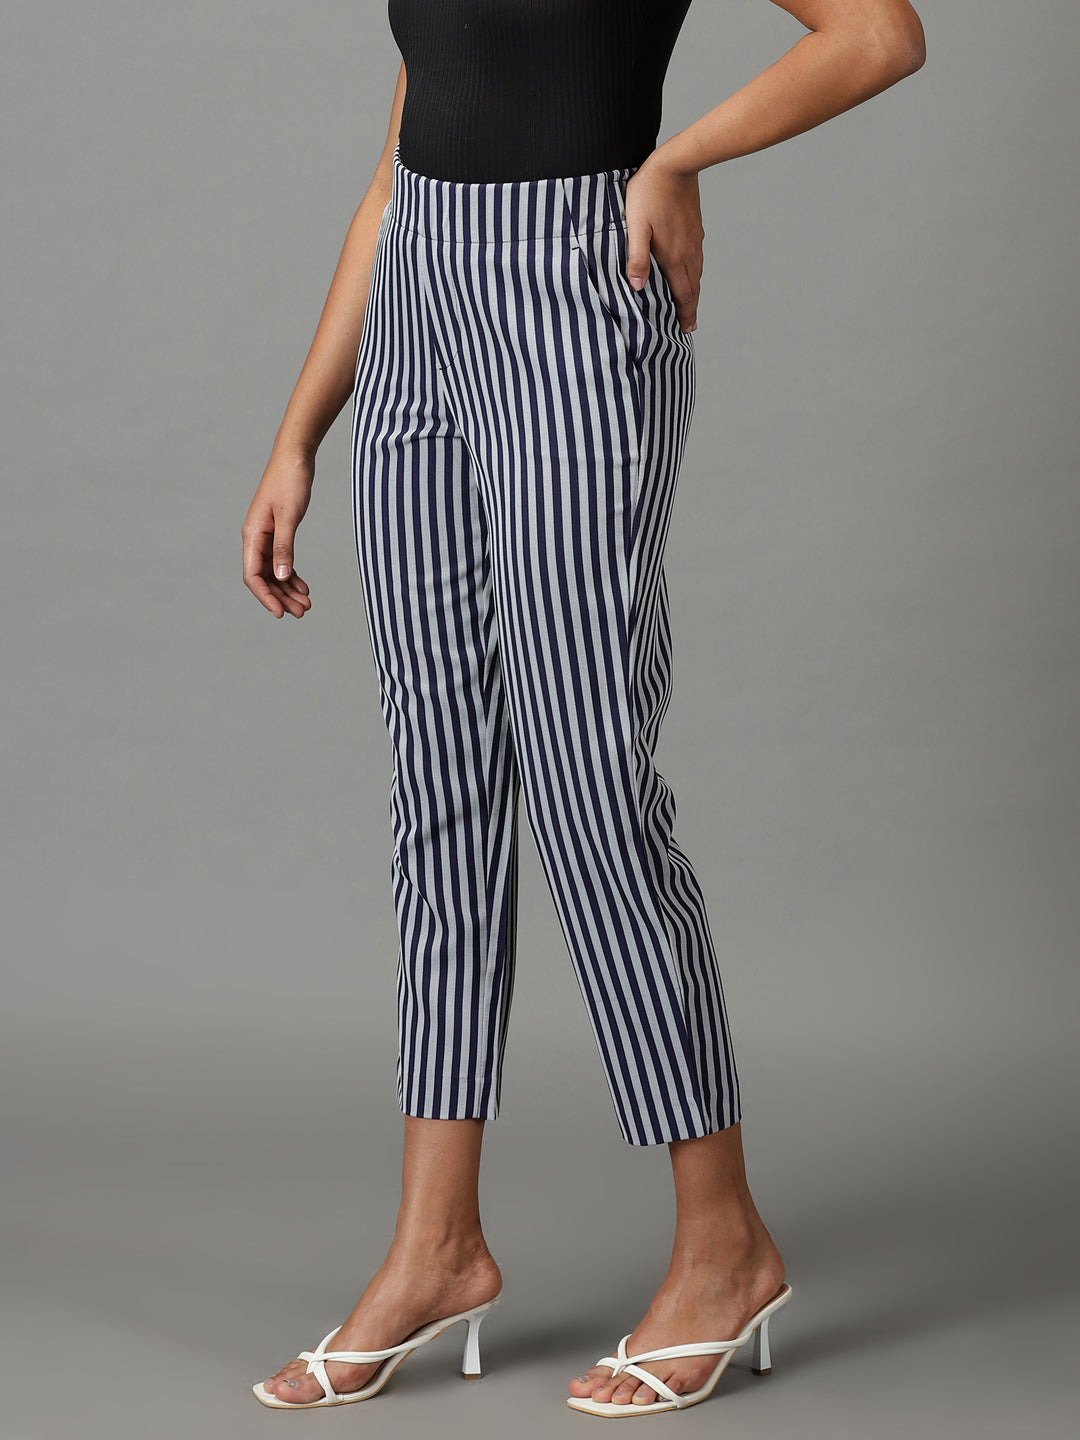 Women's Navy Blue Striped Formal Trouser